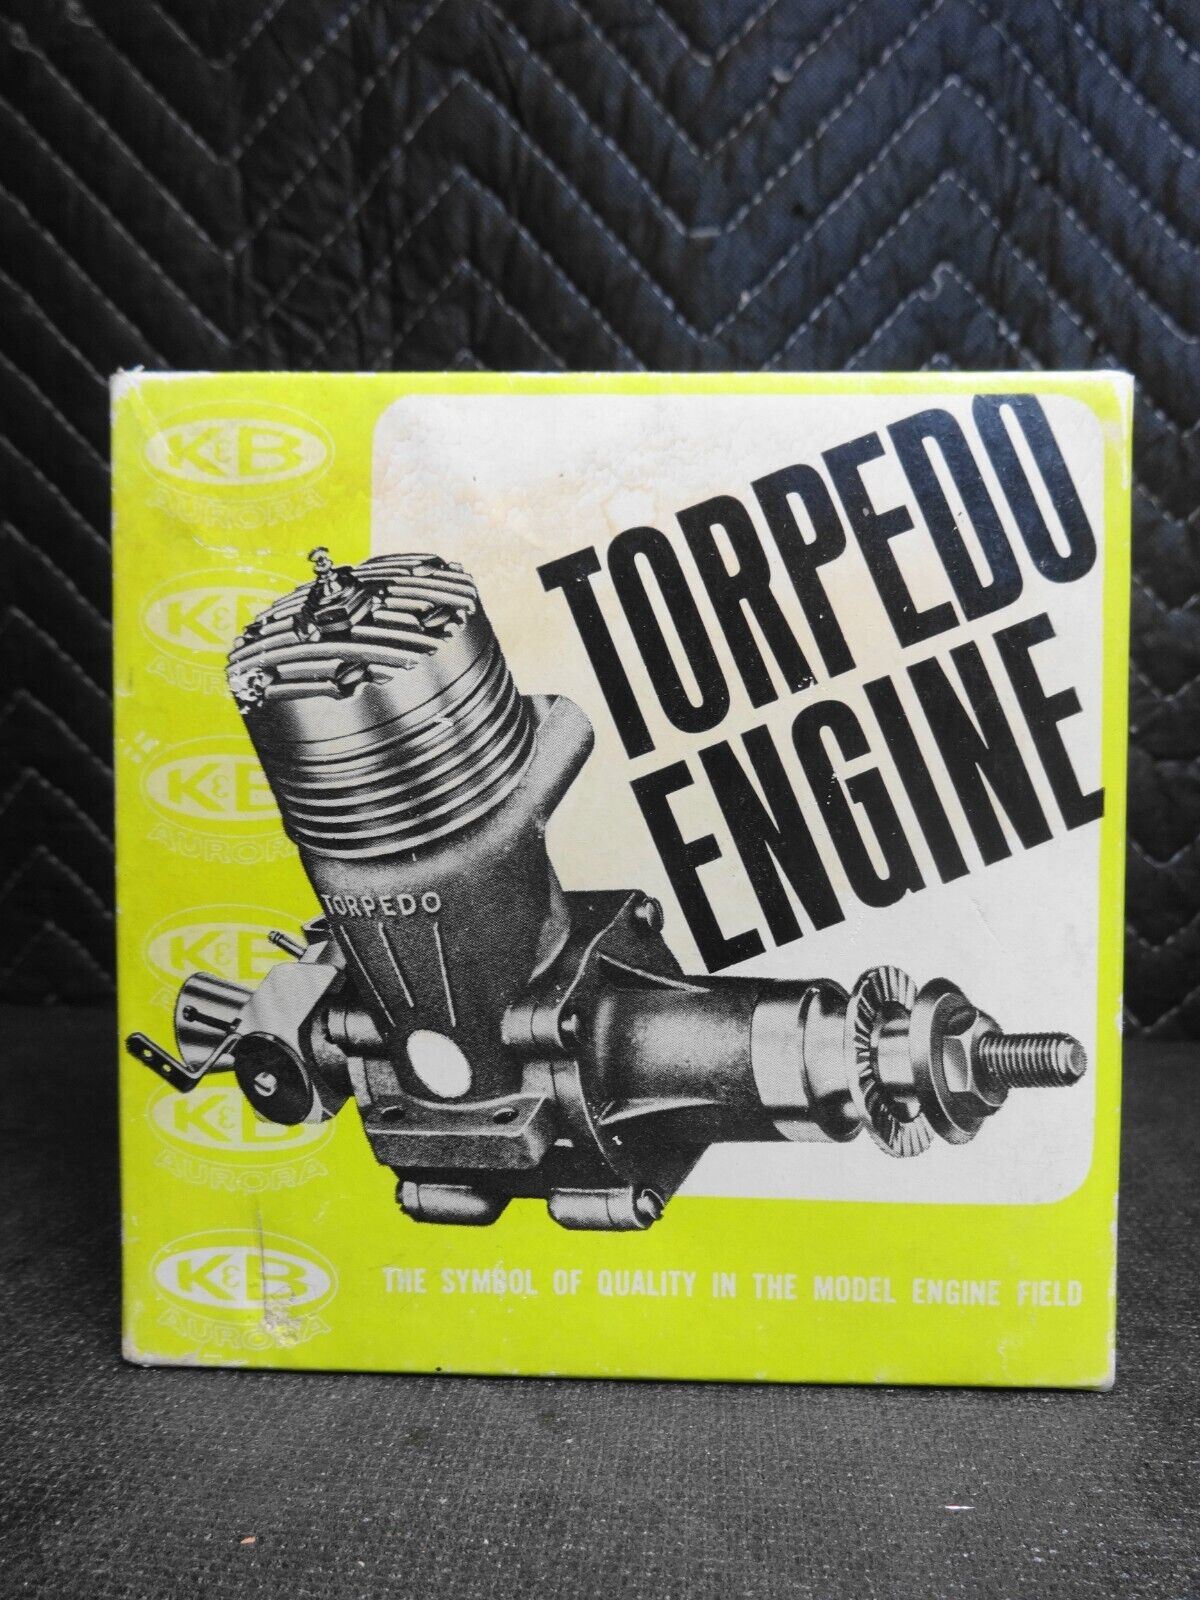 Vintage NOS K&B Torpedo 40 RC Rear Rotor Series 70 Engine Never Run/Mounted